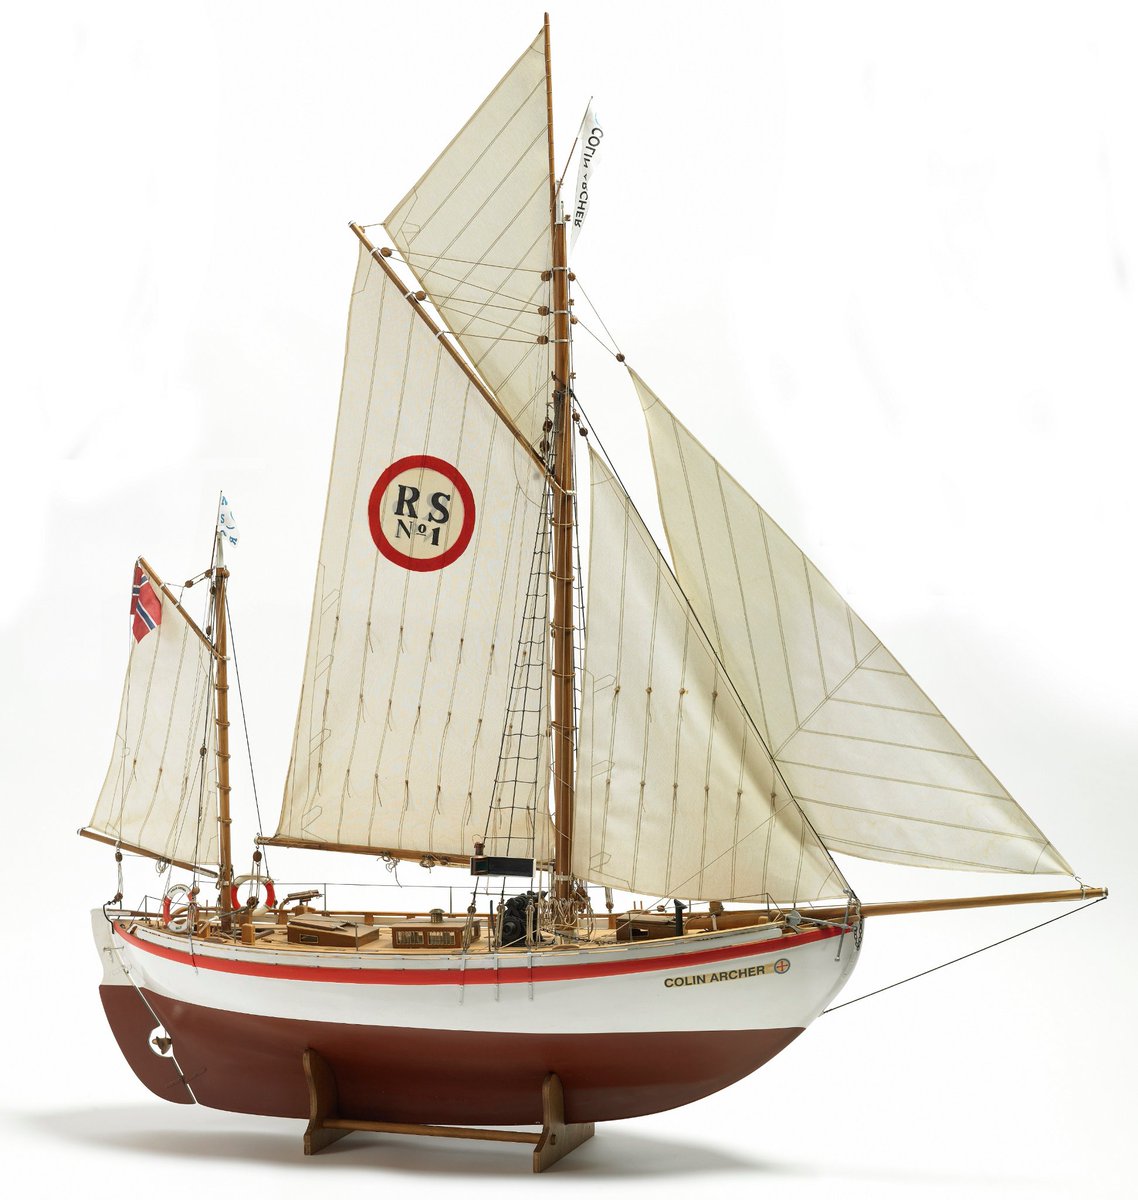 Great savings of the range of wooden model boat kits from Billings Boats. #sale #bargains #billingsboats #woodenboats #modelships #modelboats
wonderlandmodels.com/brands/billing…